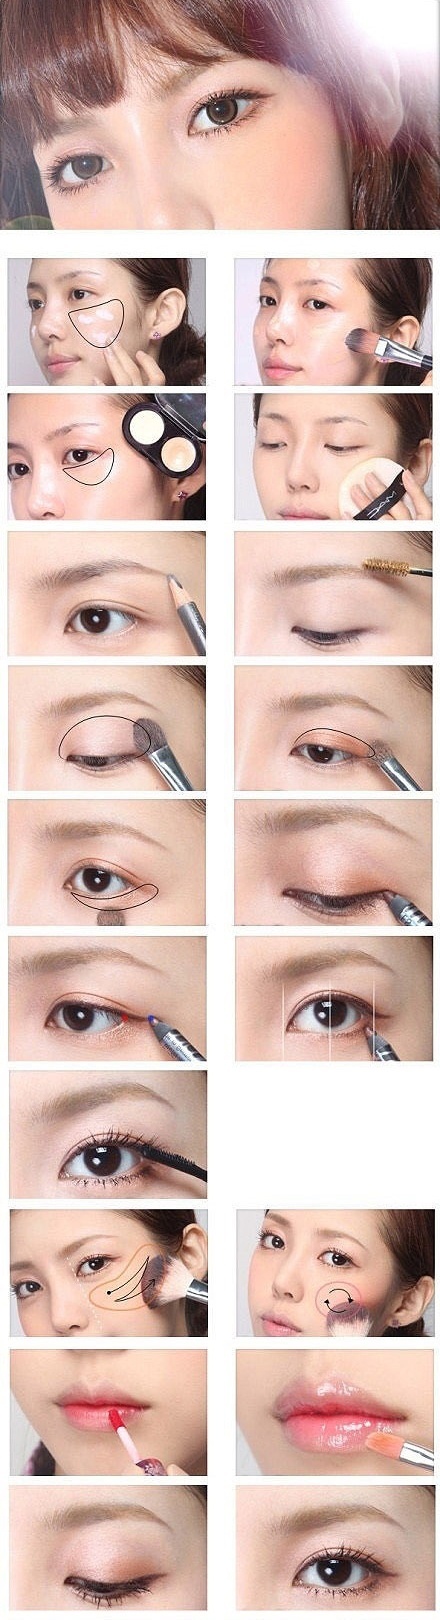 mori-makeup-tutorial-17_14 Mori make-up tutorial